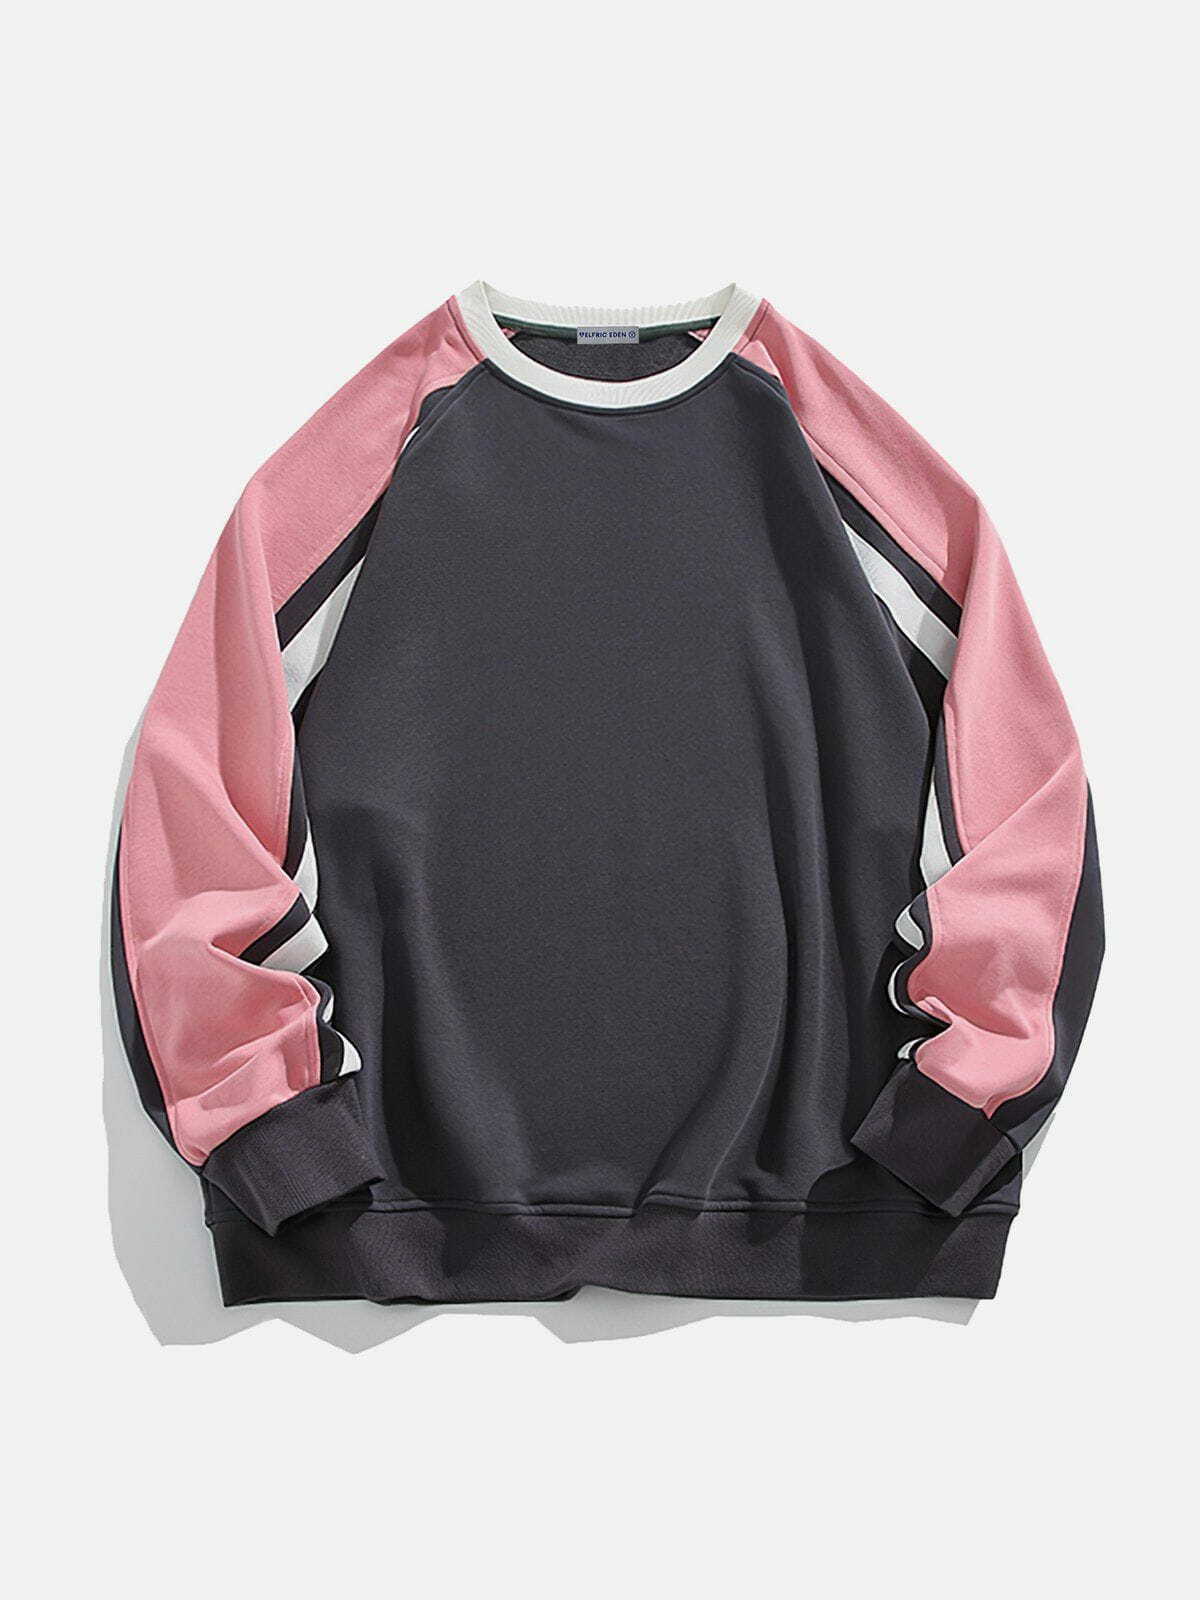 patchwork color block sweatshirt urban fashion trend 2792